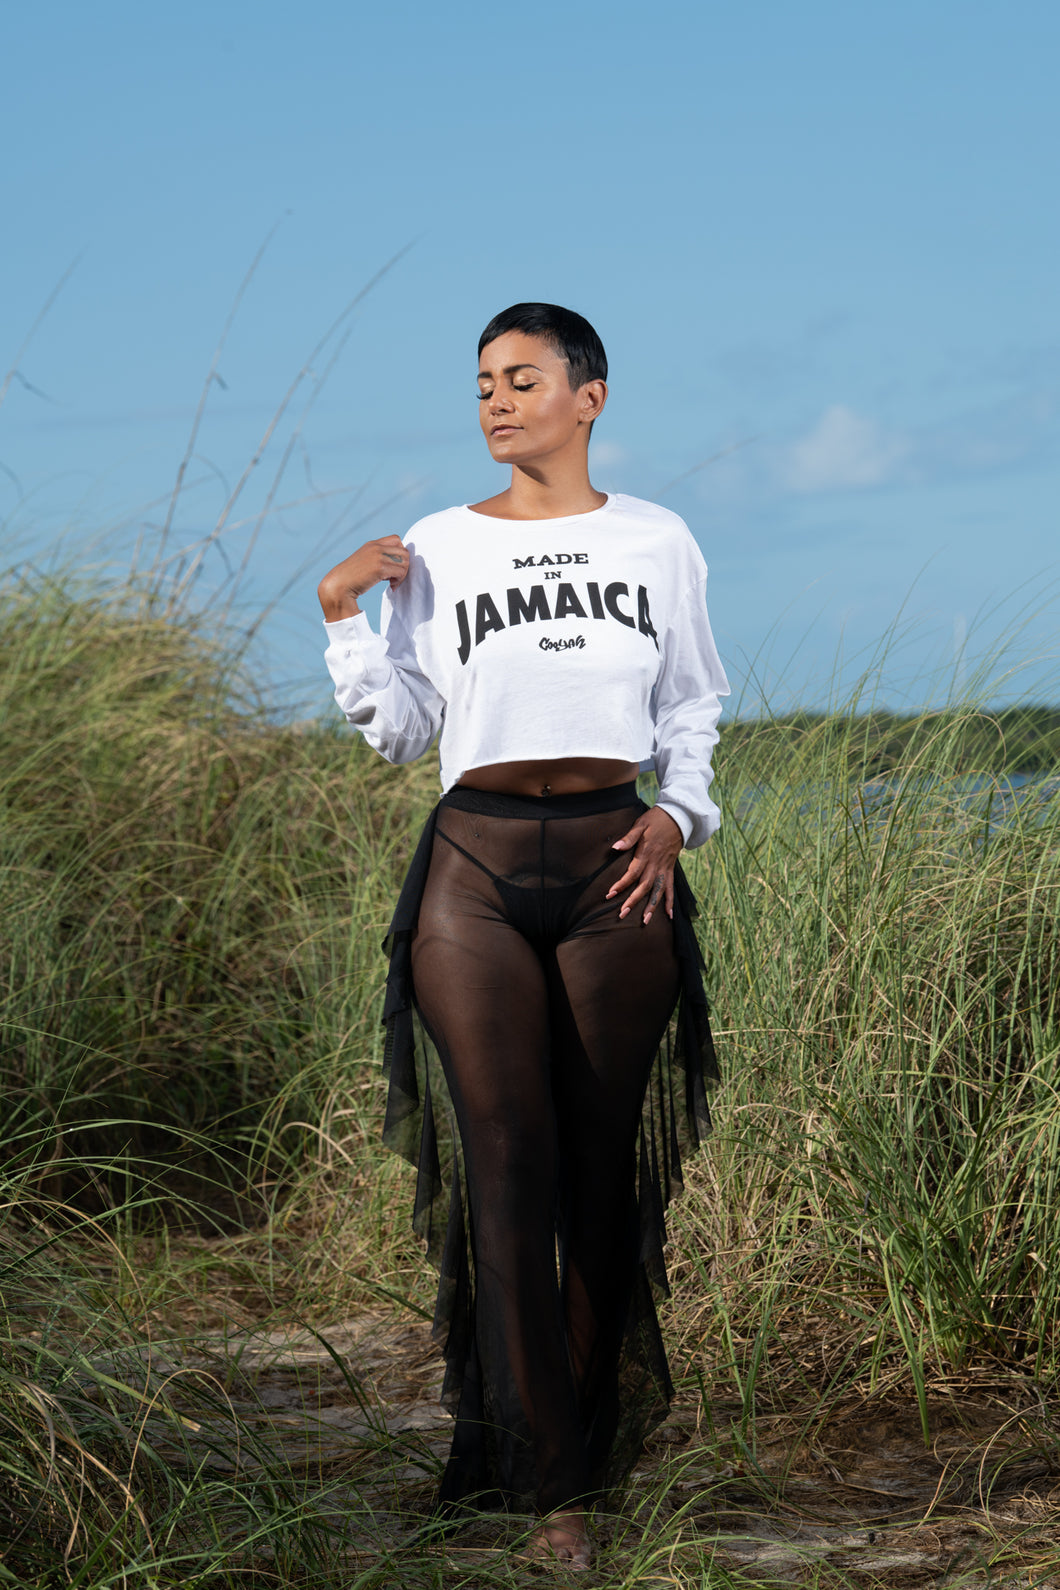  Cooyah Jamaica. Dancehall style beachwear. Micro Mesh Flutter Pants in black.